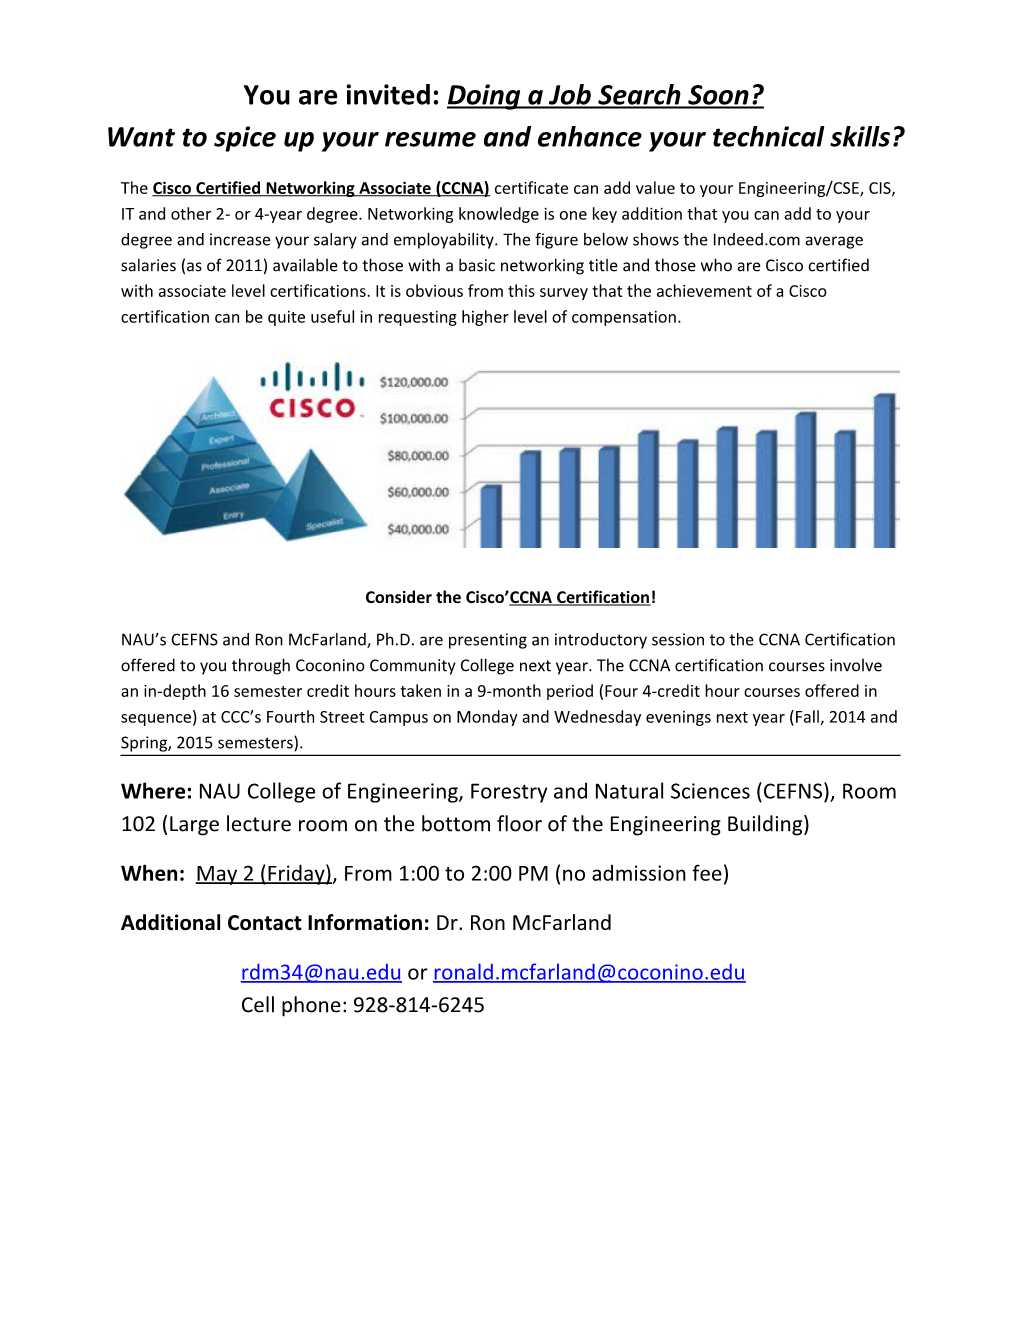 Consider the Cisco CCNA Certification!